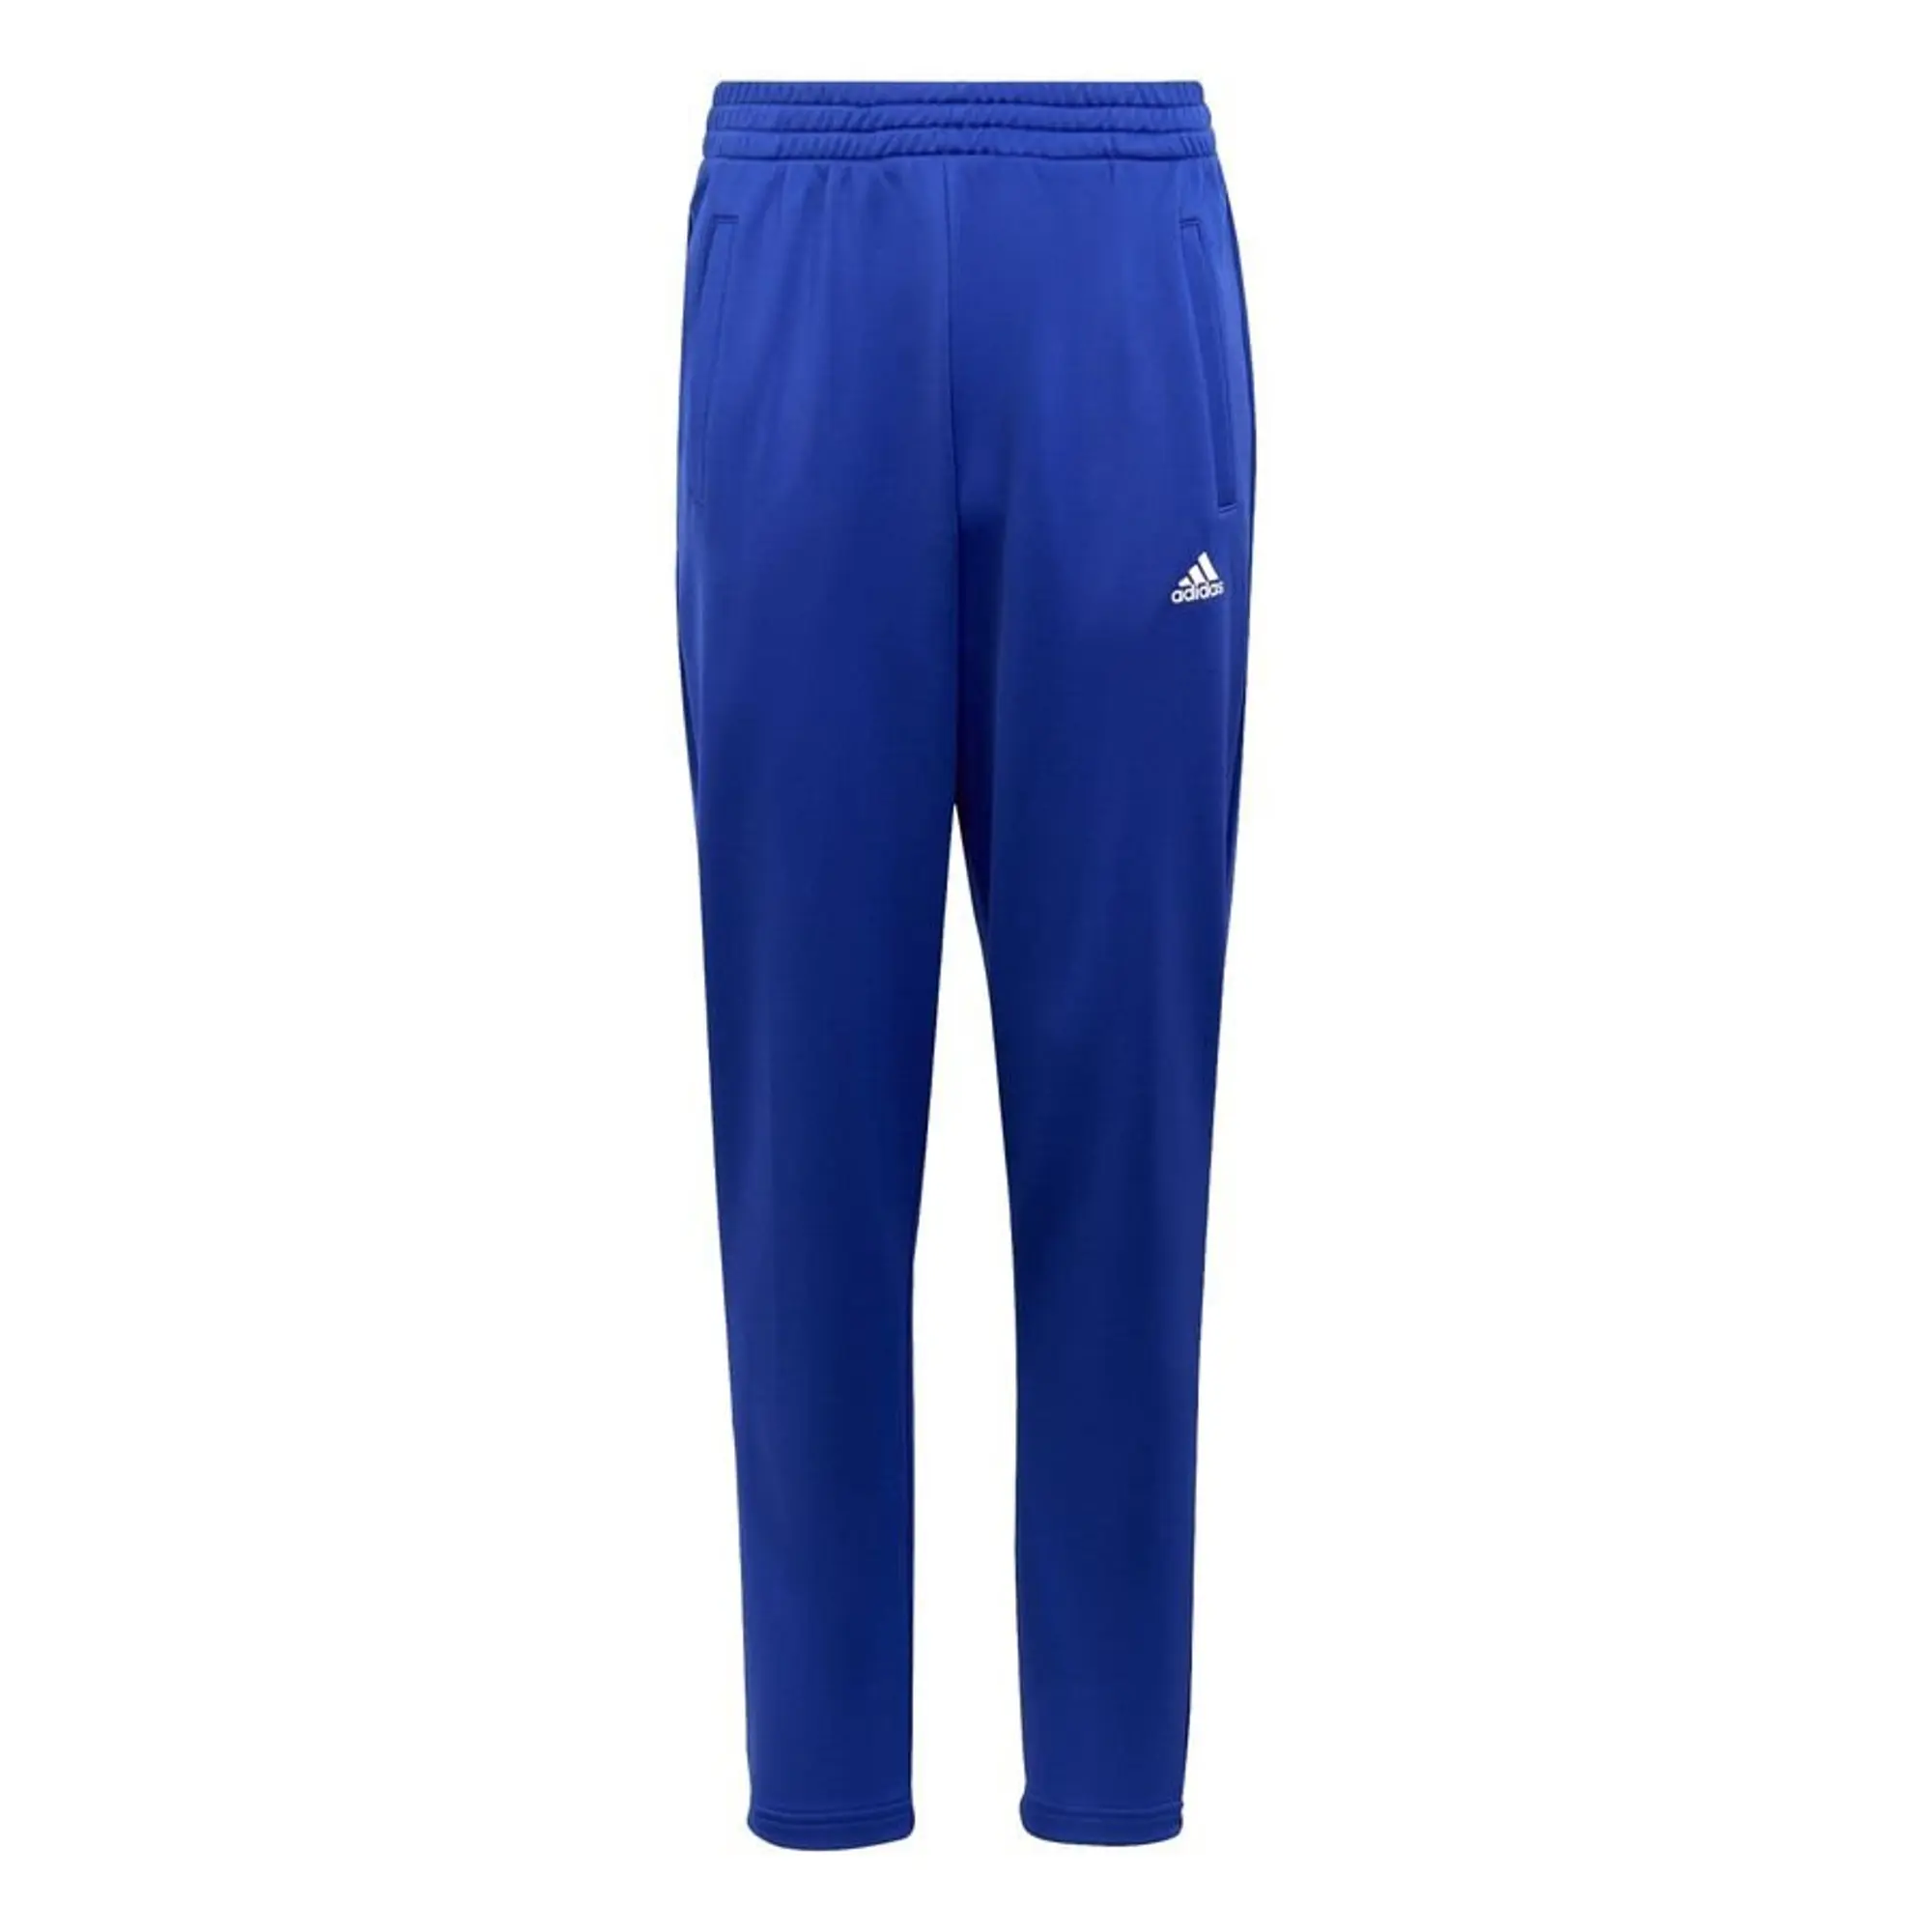 Adidas Training Trousers - Blue | ID0000 | FOOTY.COM